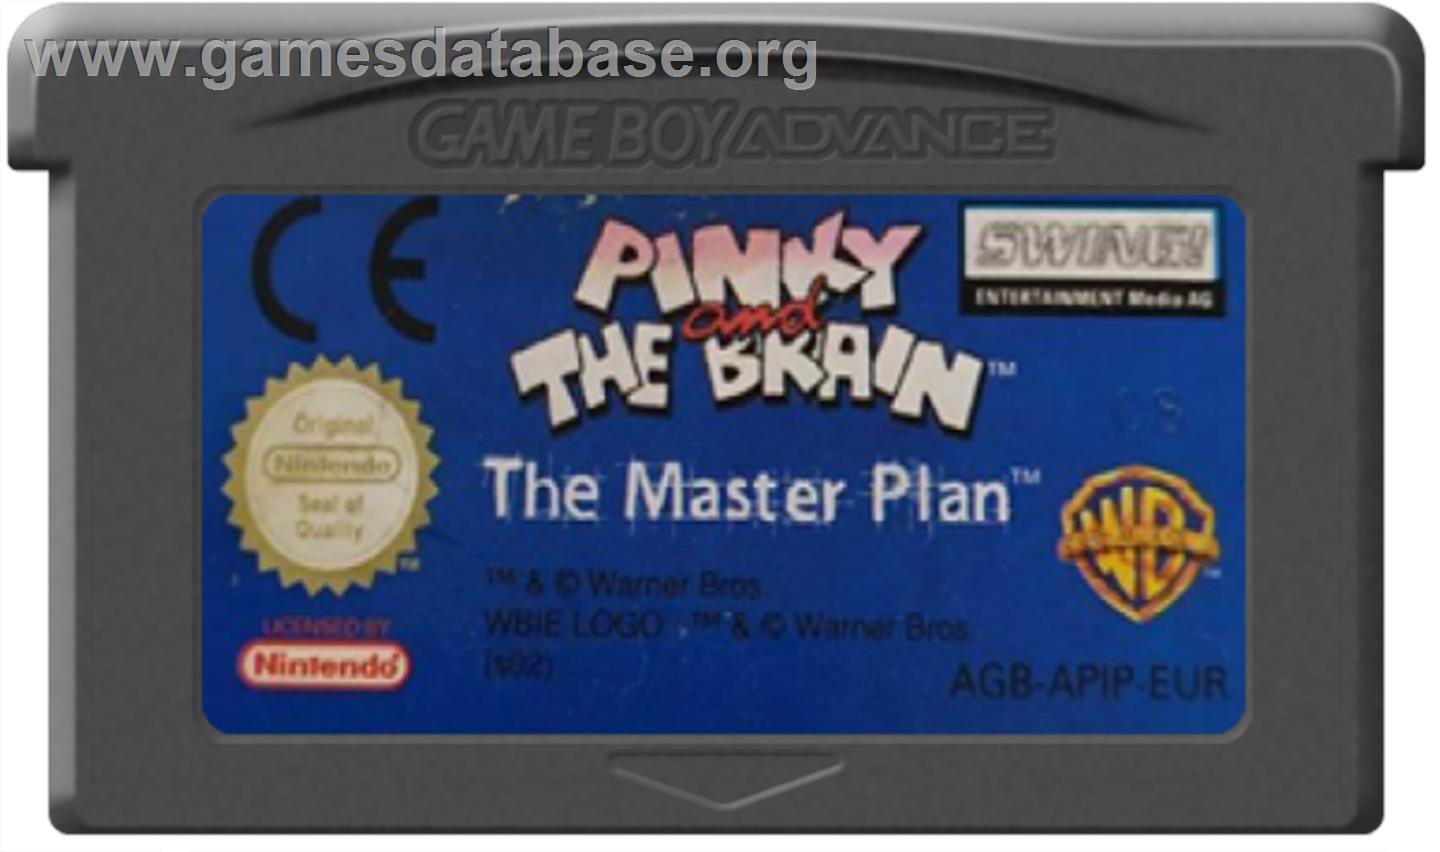 Pinky and the Brain: The Master Plan - Nintendo Game Boy Advance - Artwork - Cartridge